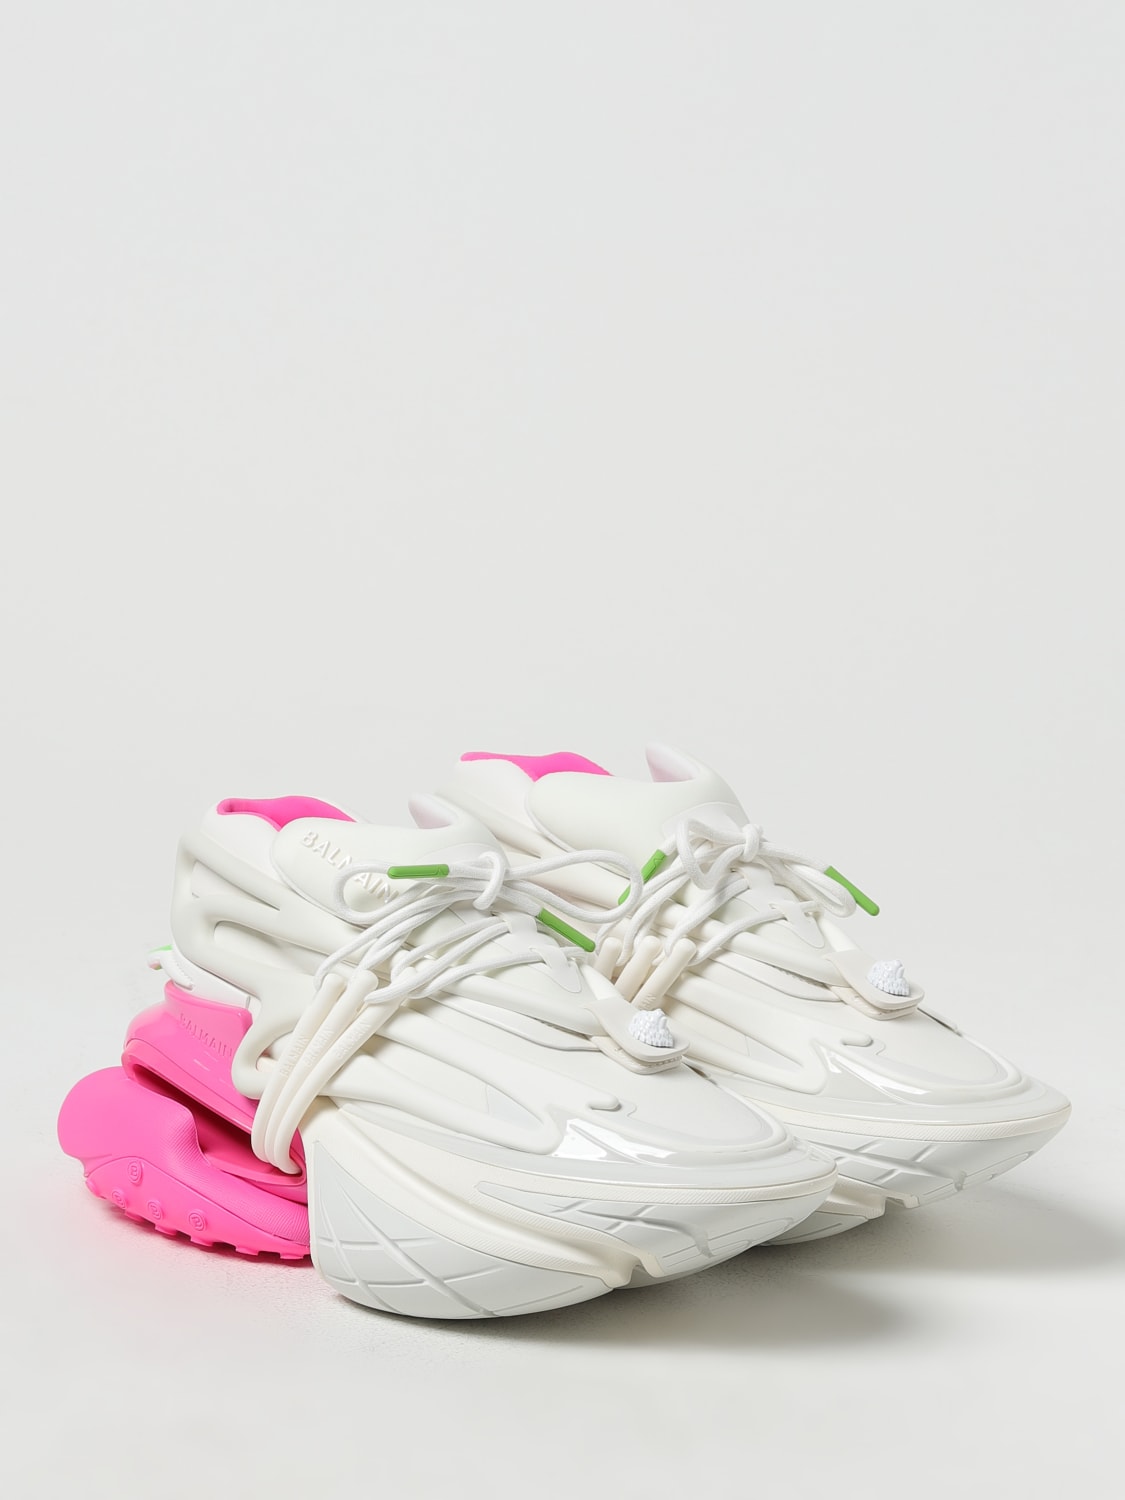 Balmain - Women's Unicorn in Neoprene and Leather Low-top Sneakers - Pink - Sneakers - 37